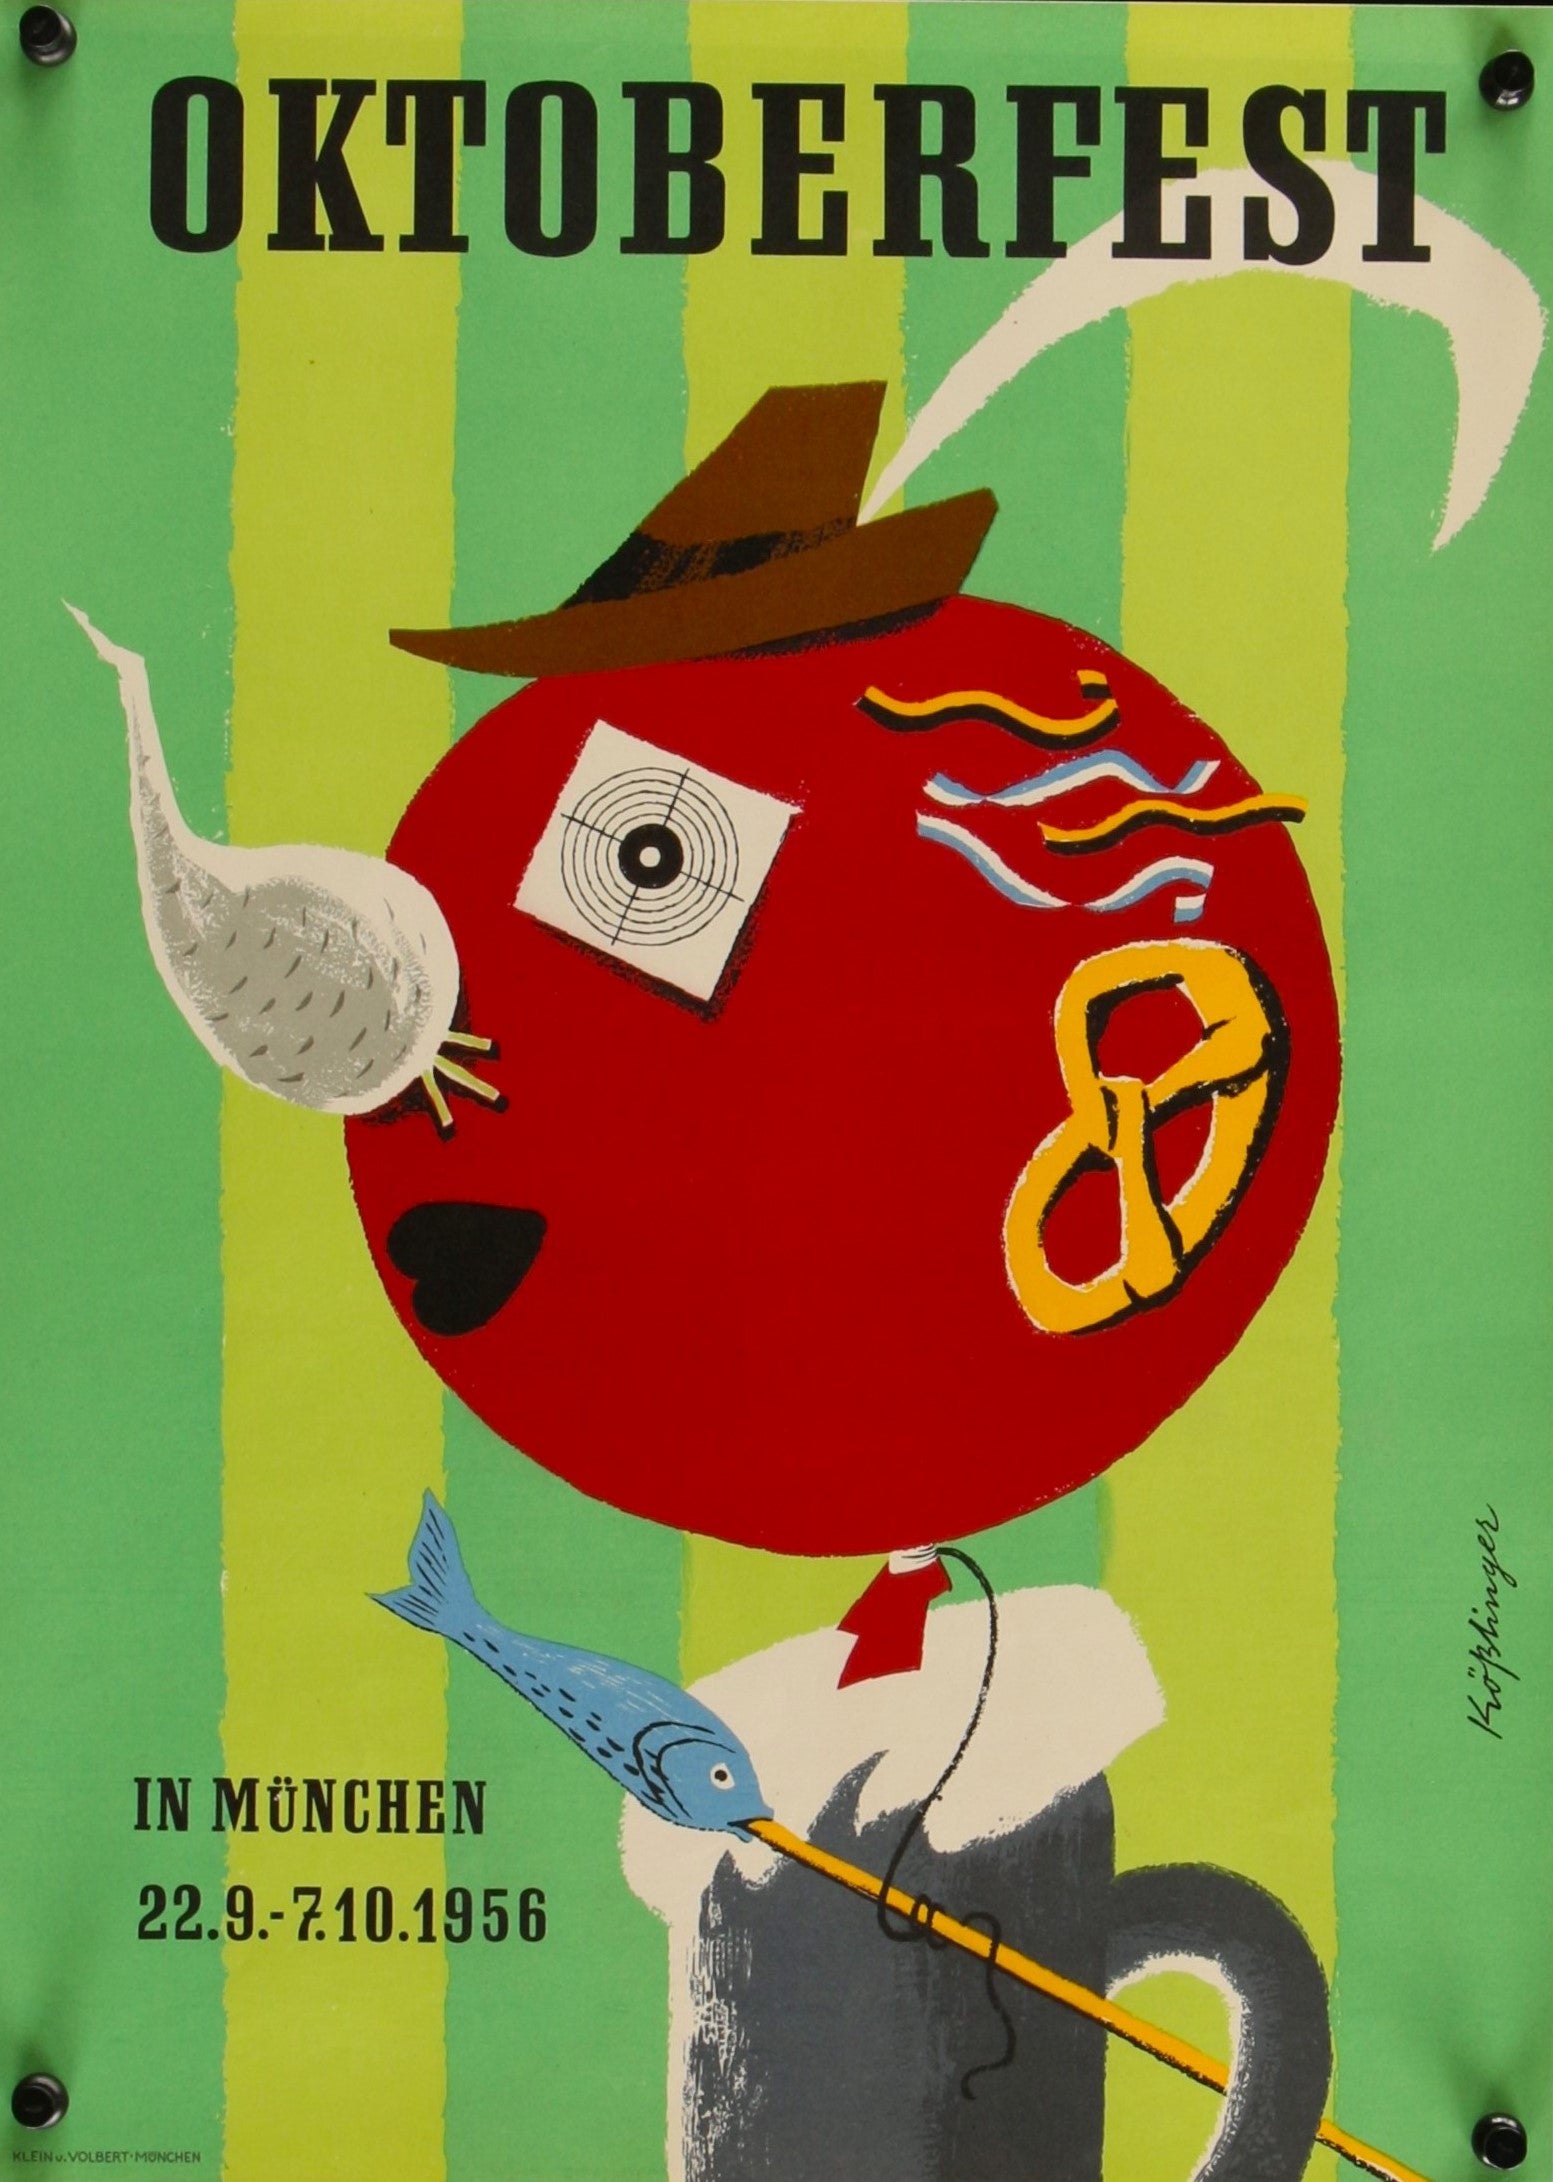 Oktoberfest - Authentic Vintage Poster